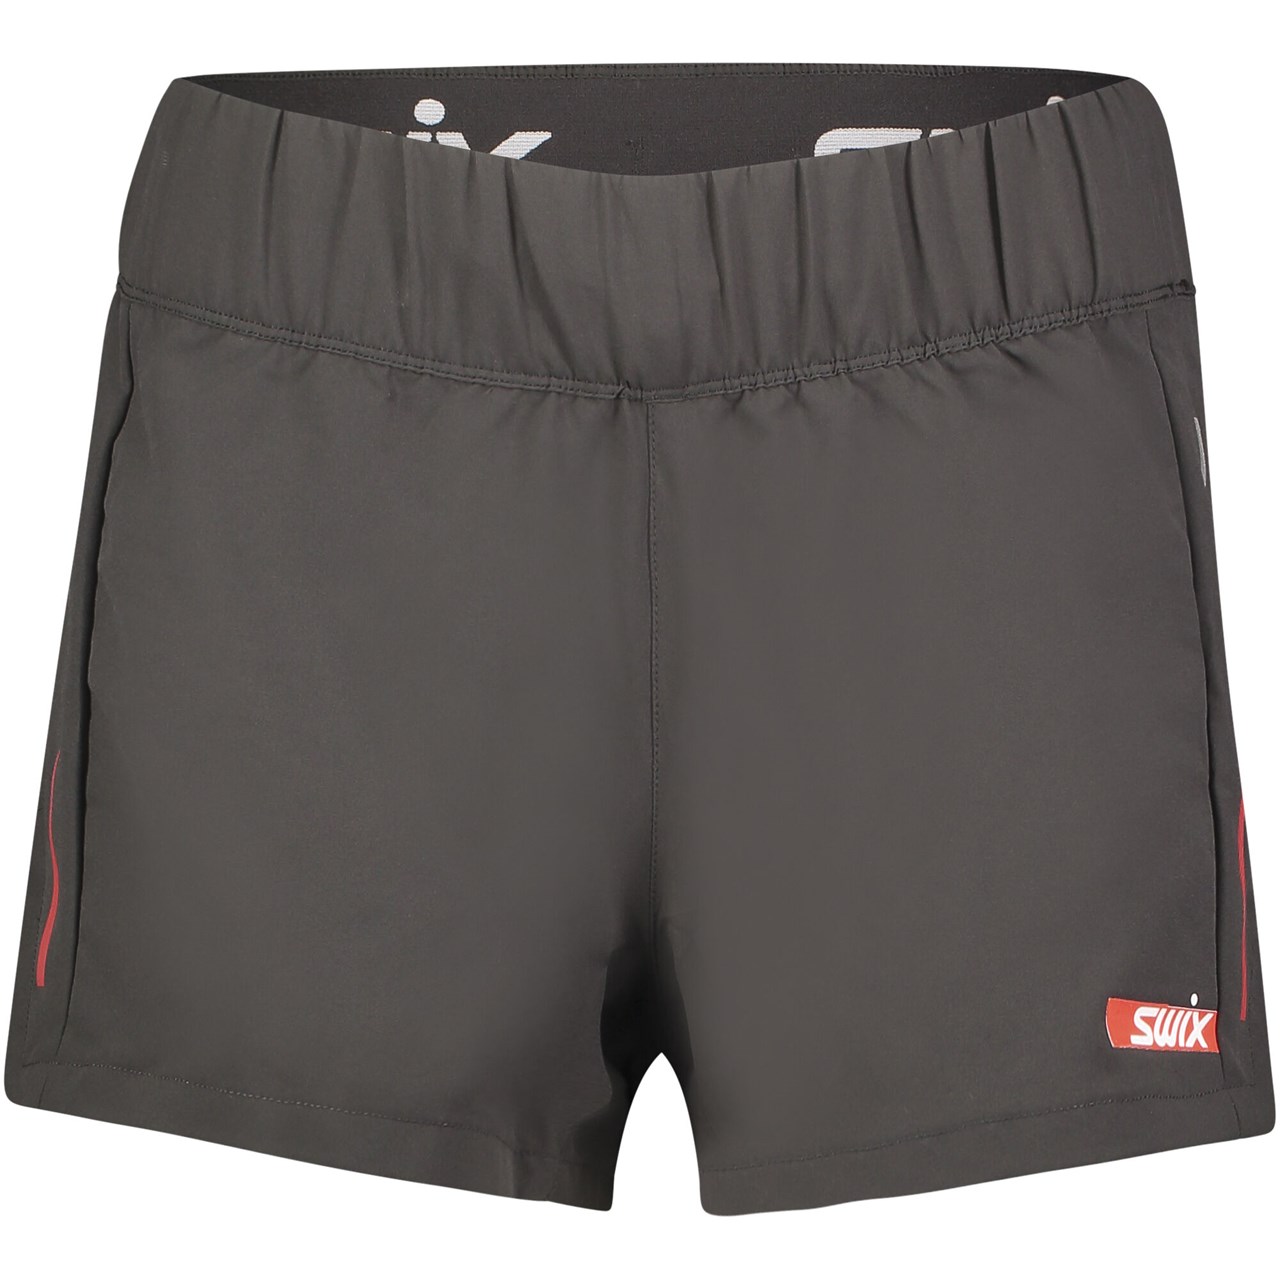 SWIX Carbon shorts - Damen